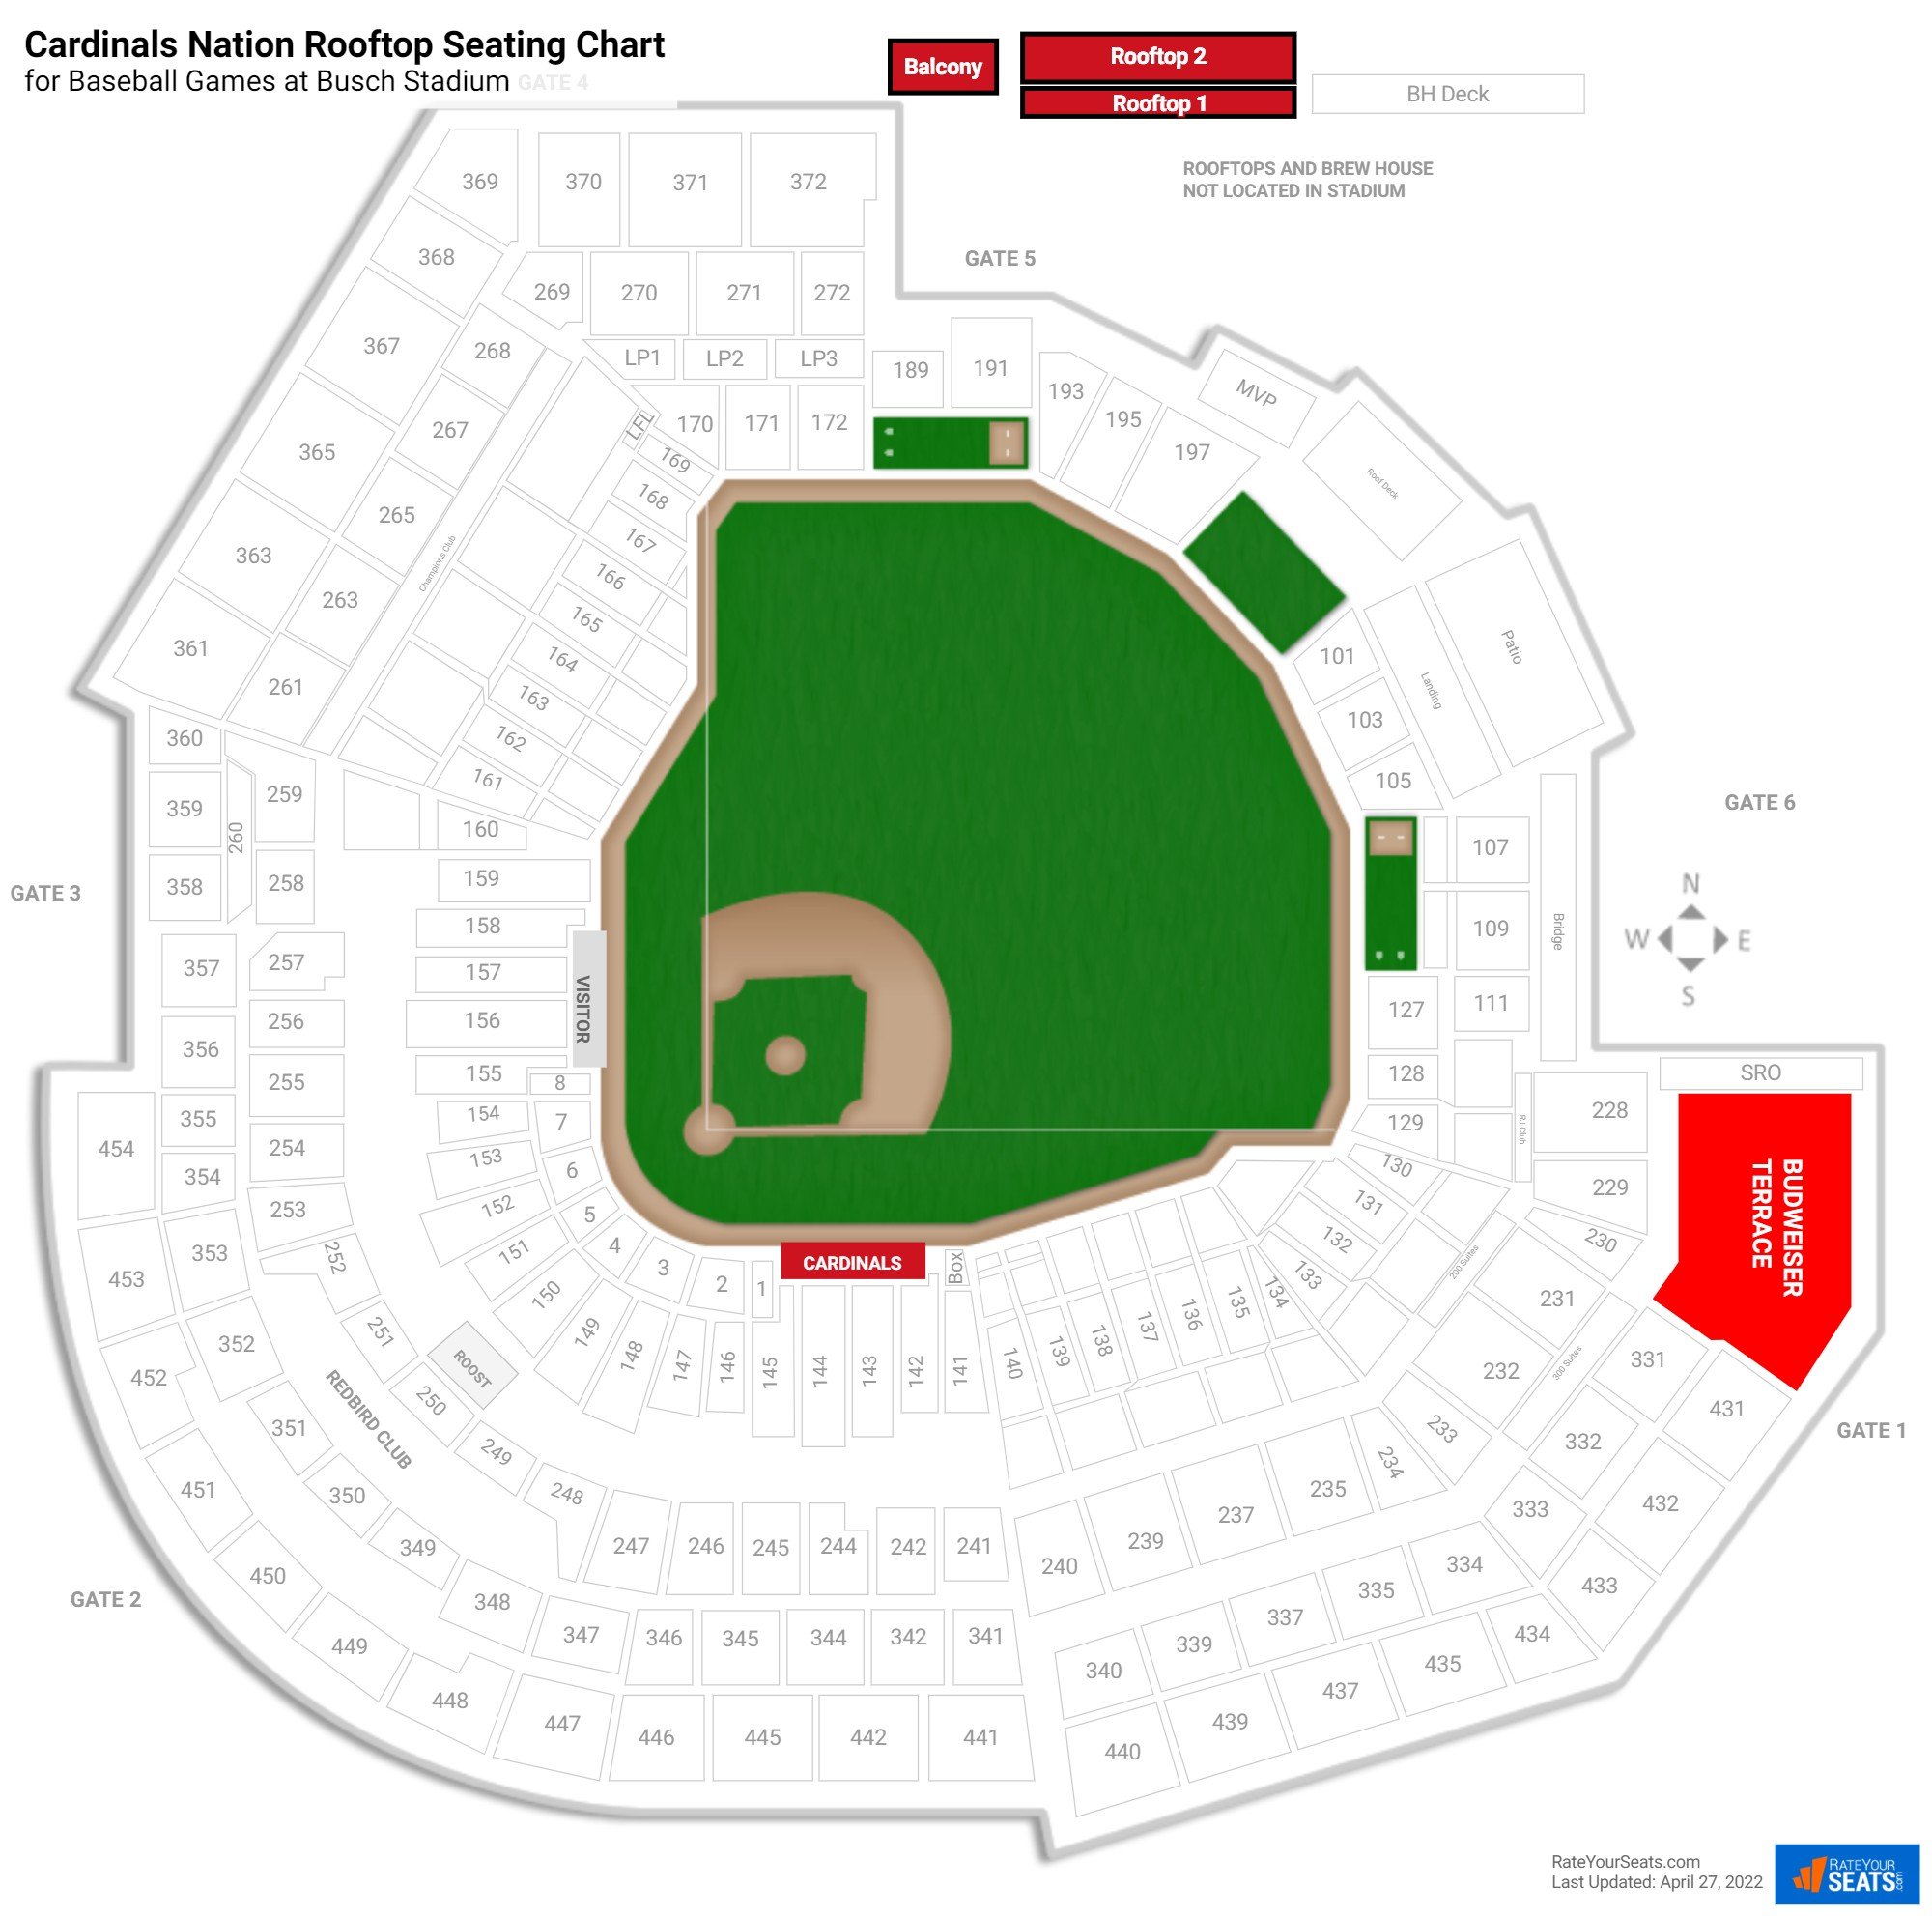 Baseball Cardinals Nation Rooftop Seating Chart at Busch Stadium